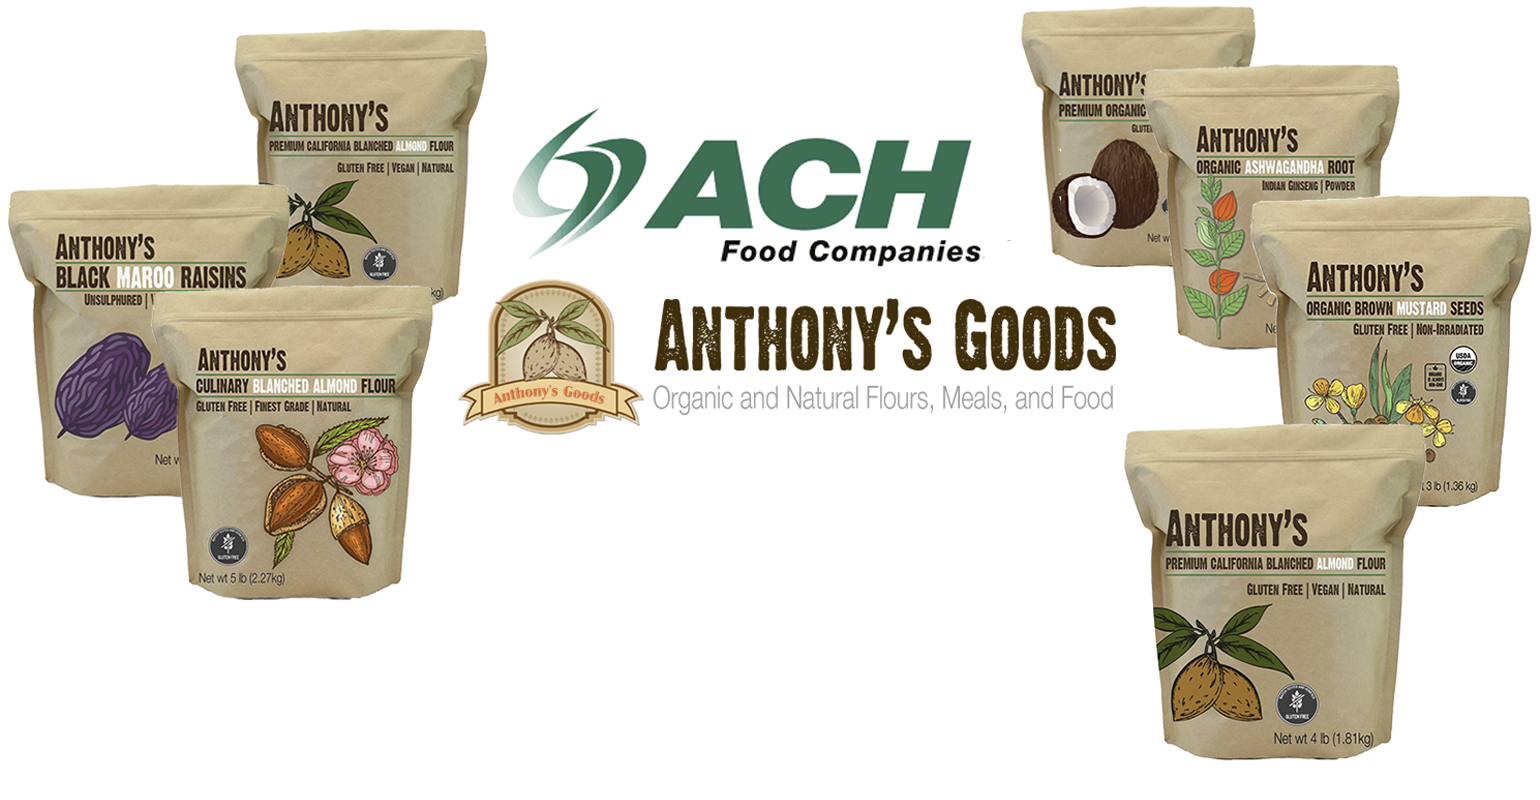 ACH Food Companies